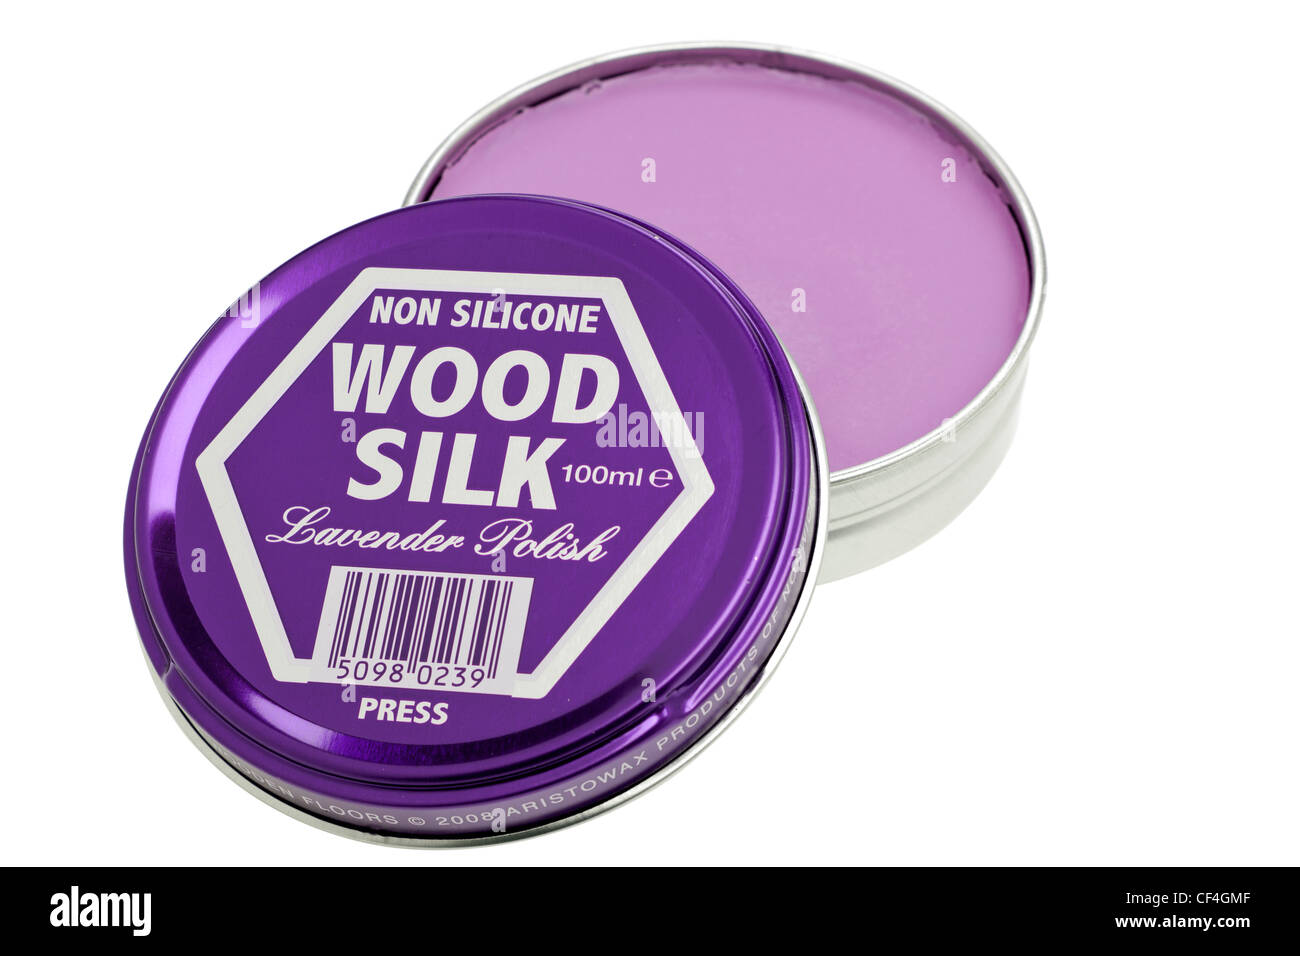 Tin of non silicone Wood Silk lavender polish Stock Photo